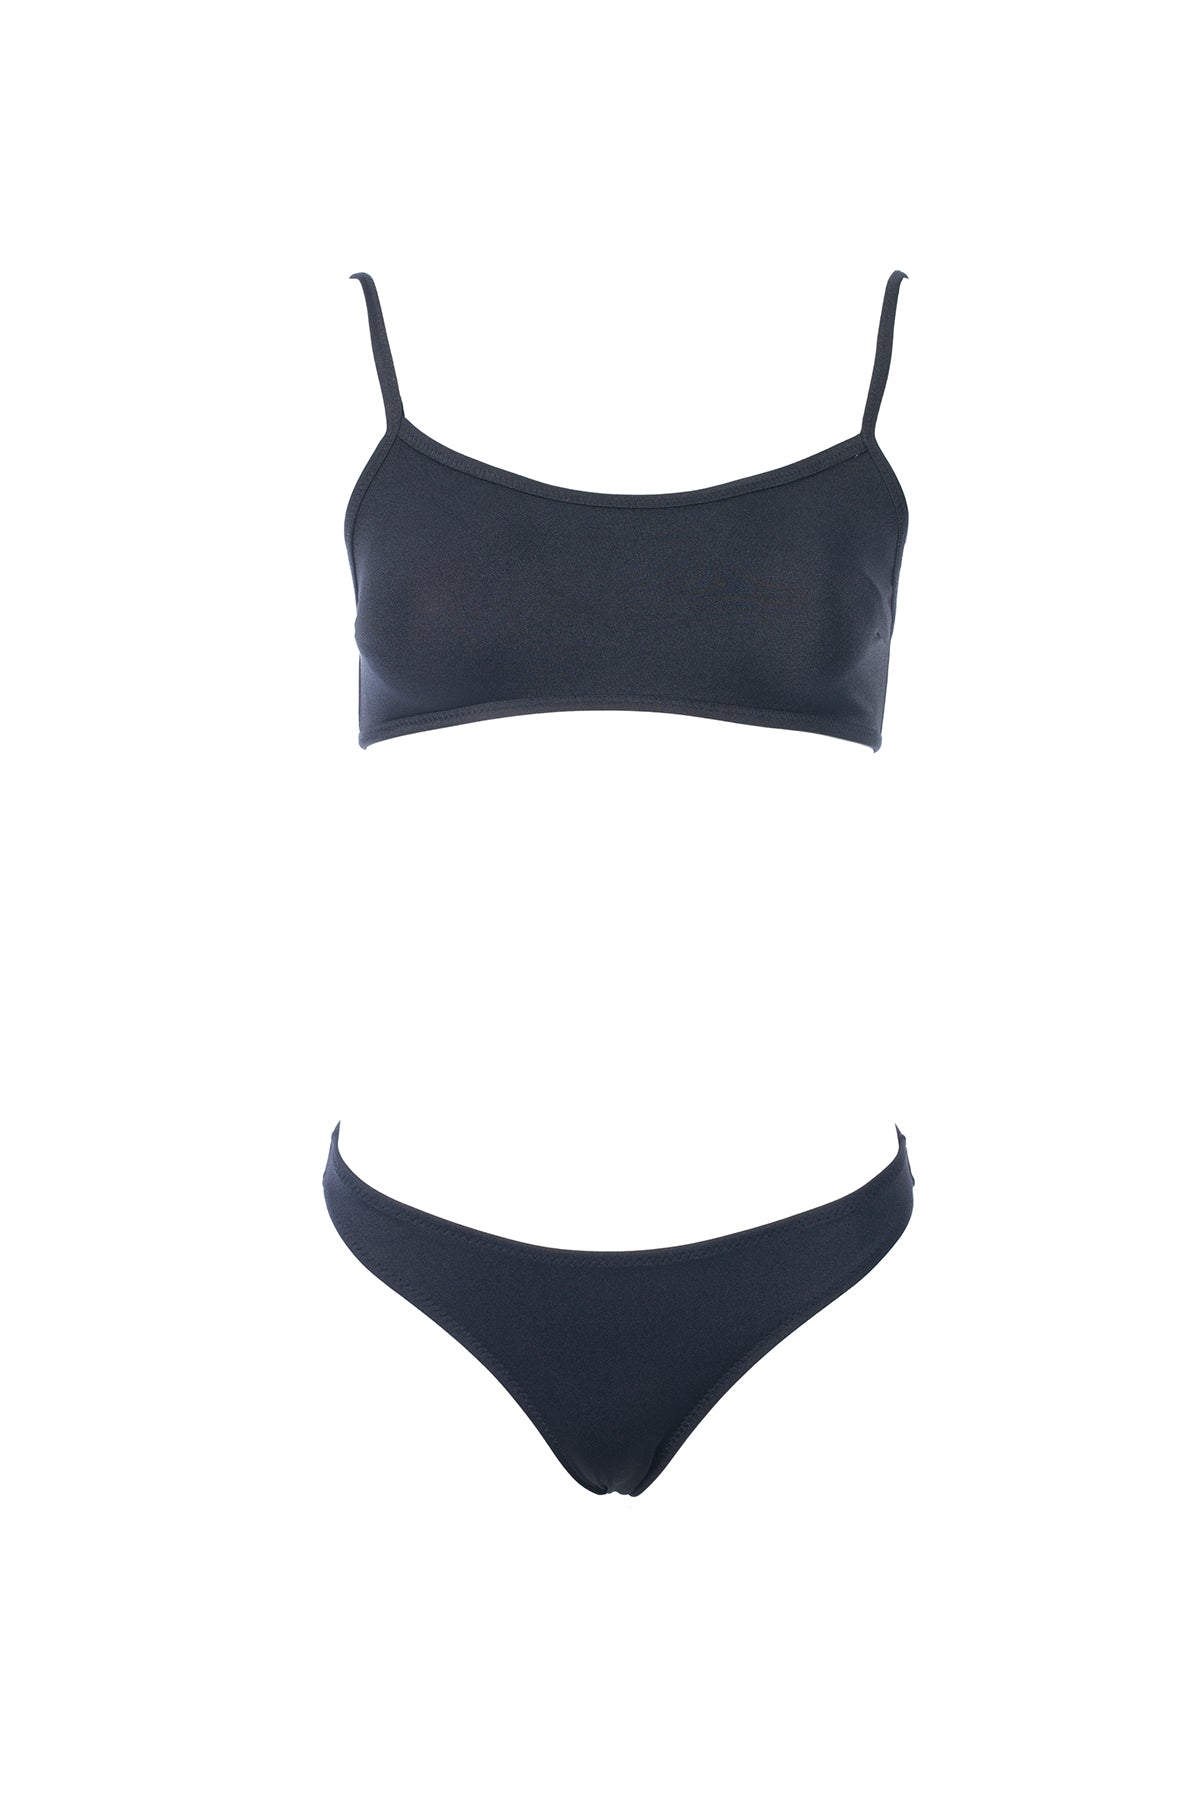 Parma Black Bikini Set